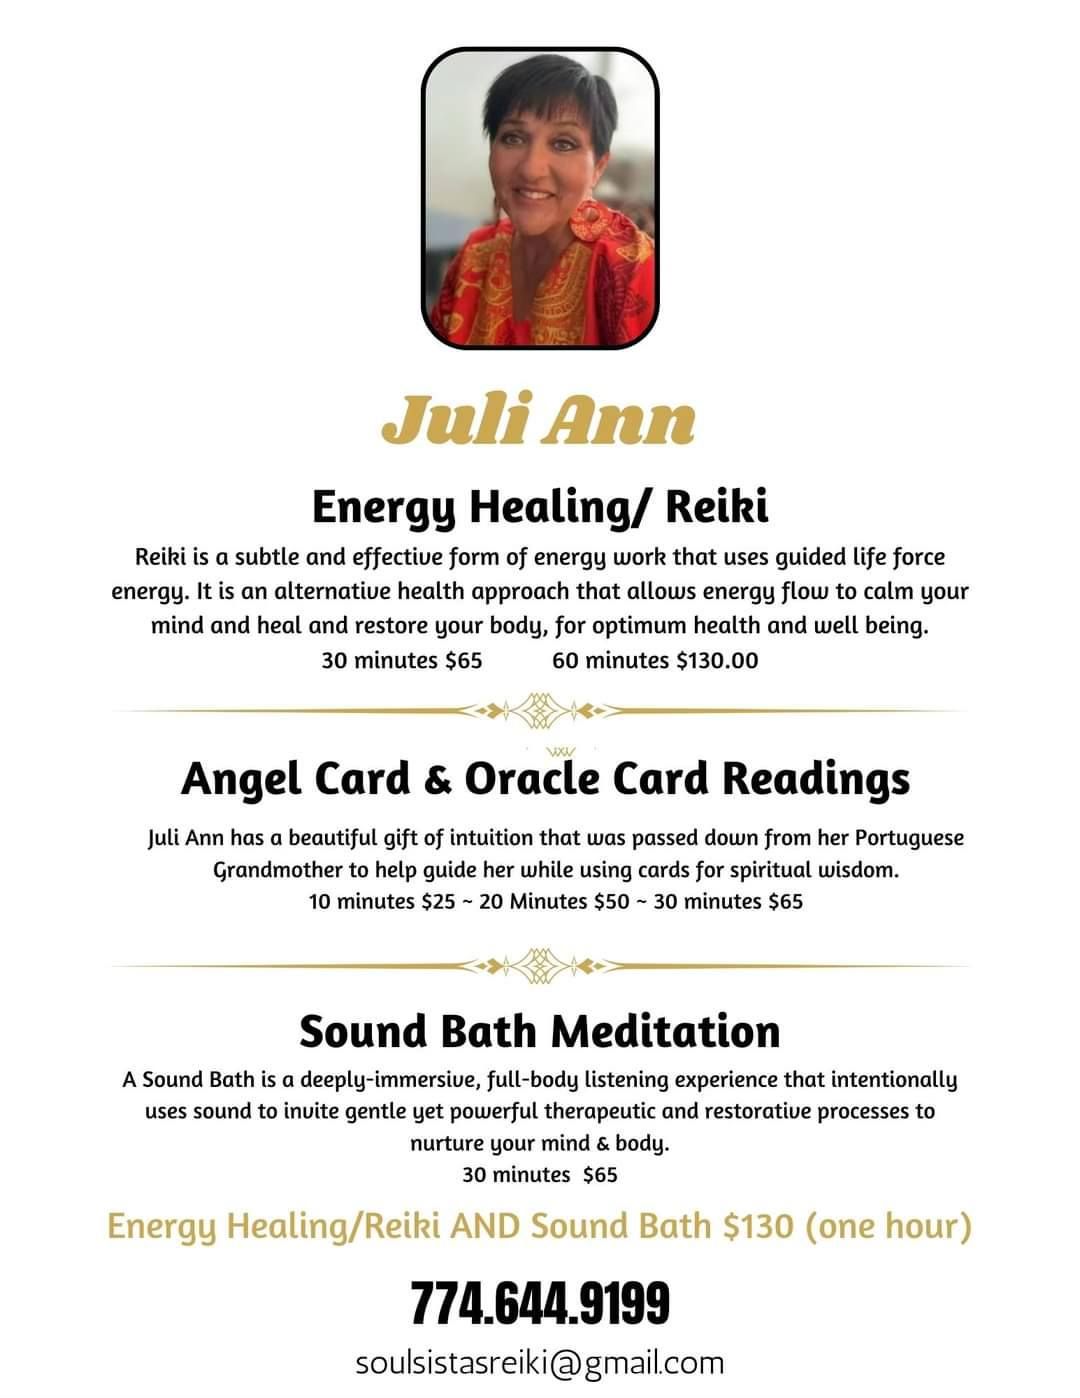 Energy Healing with Juli Ann